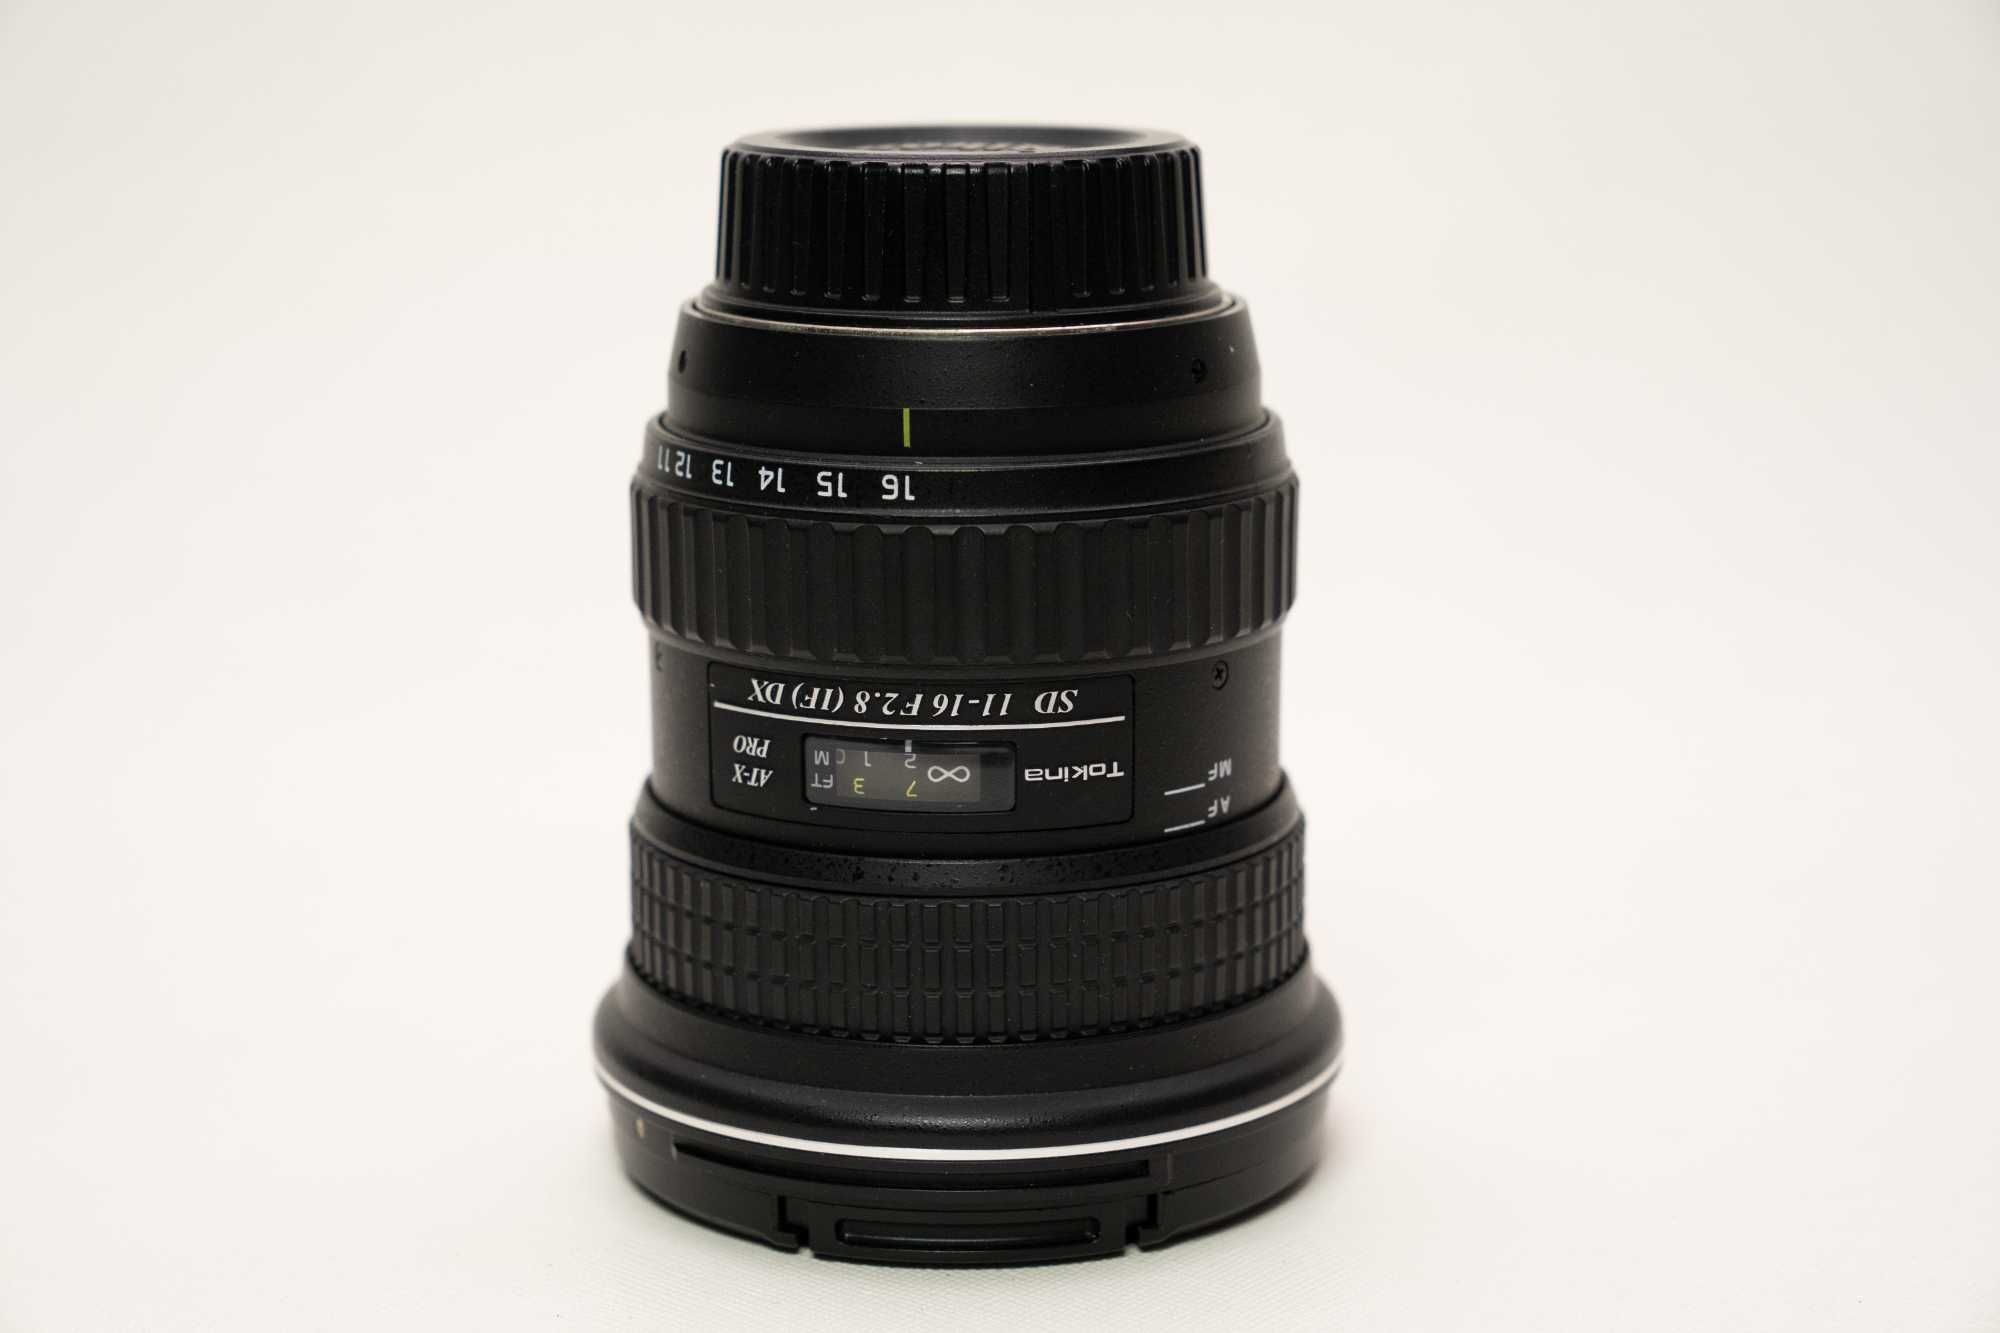 Obiectiv Tokina 11-16mm F2.8 AT-X pro DX (Nikon)